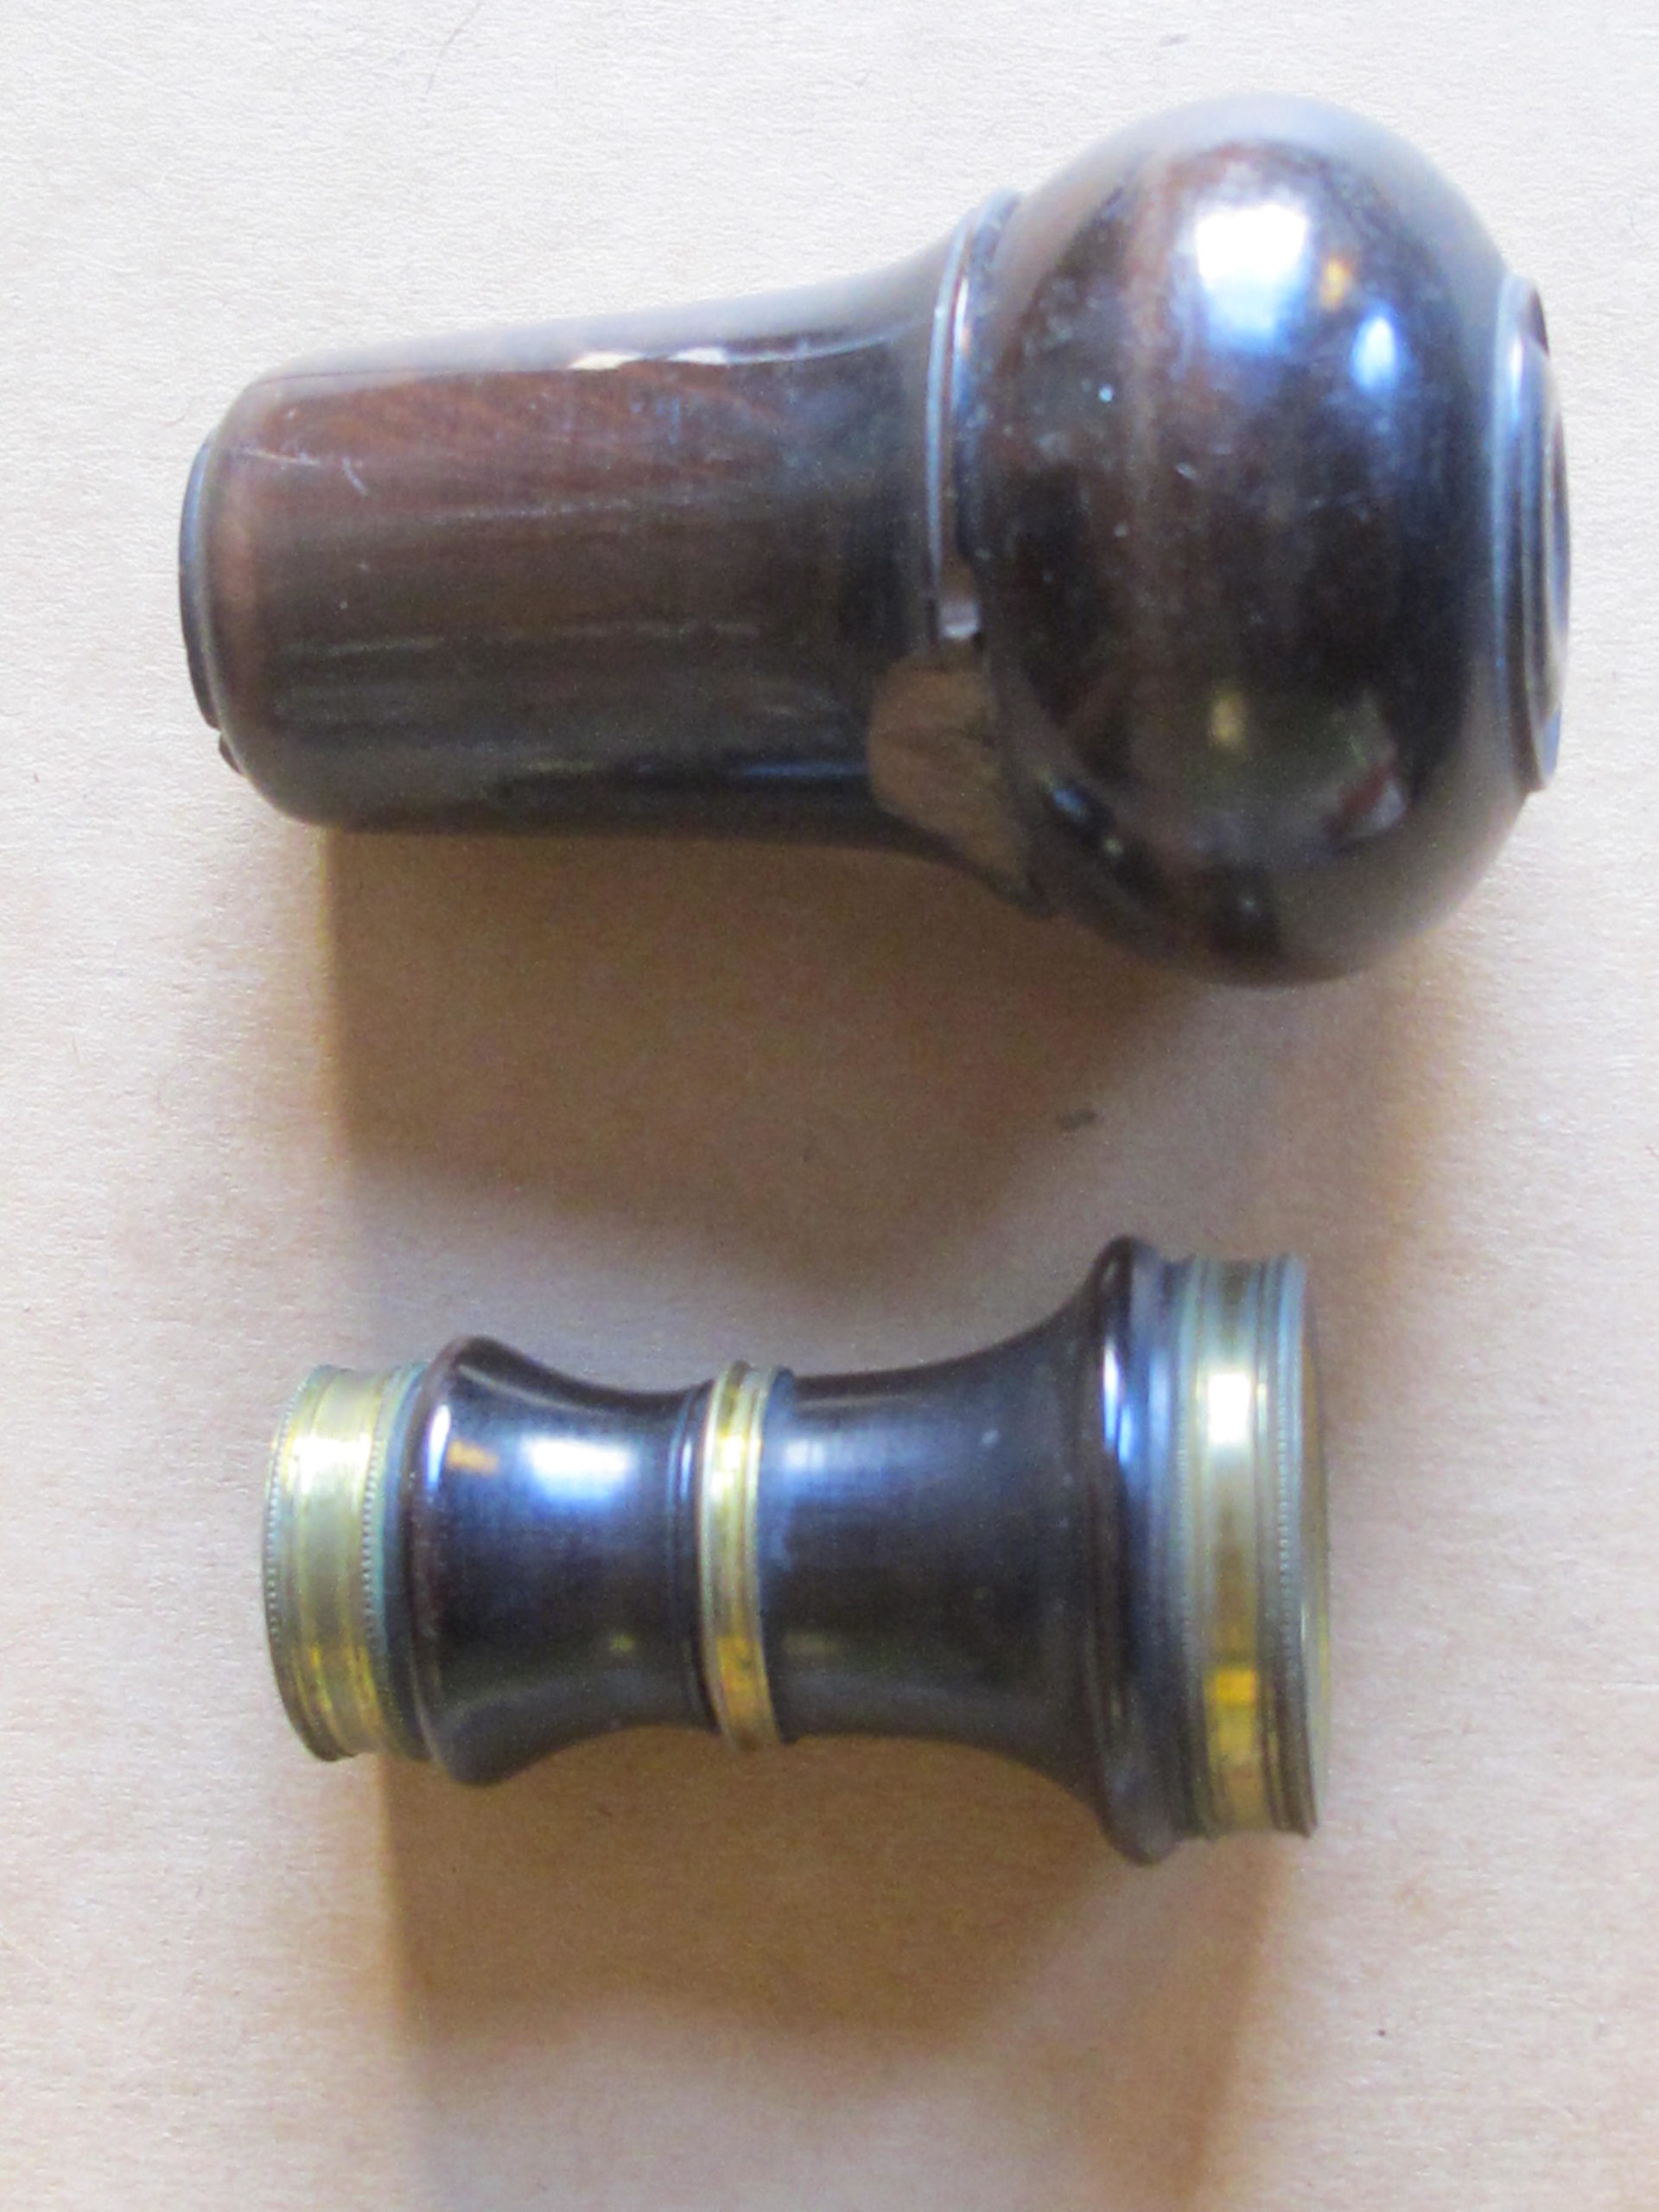 Small Eighteenth Century Fixed Focus Spyglass in Original Shaped Case